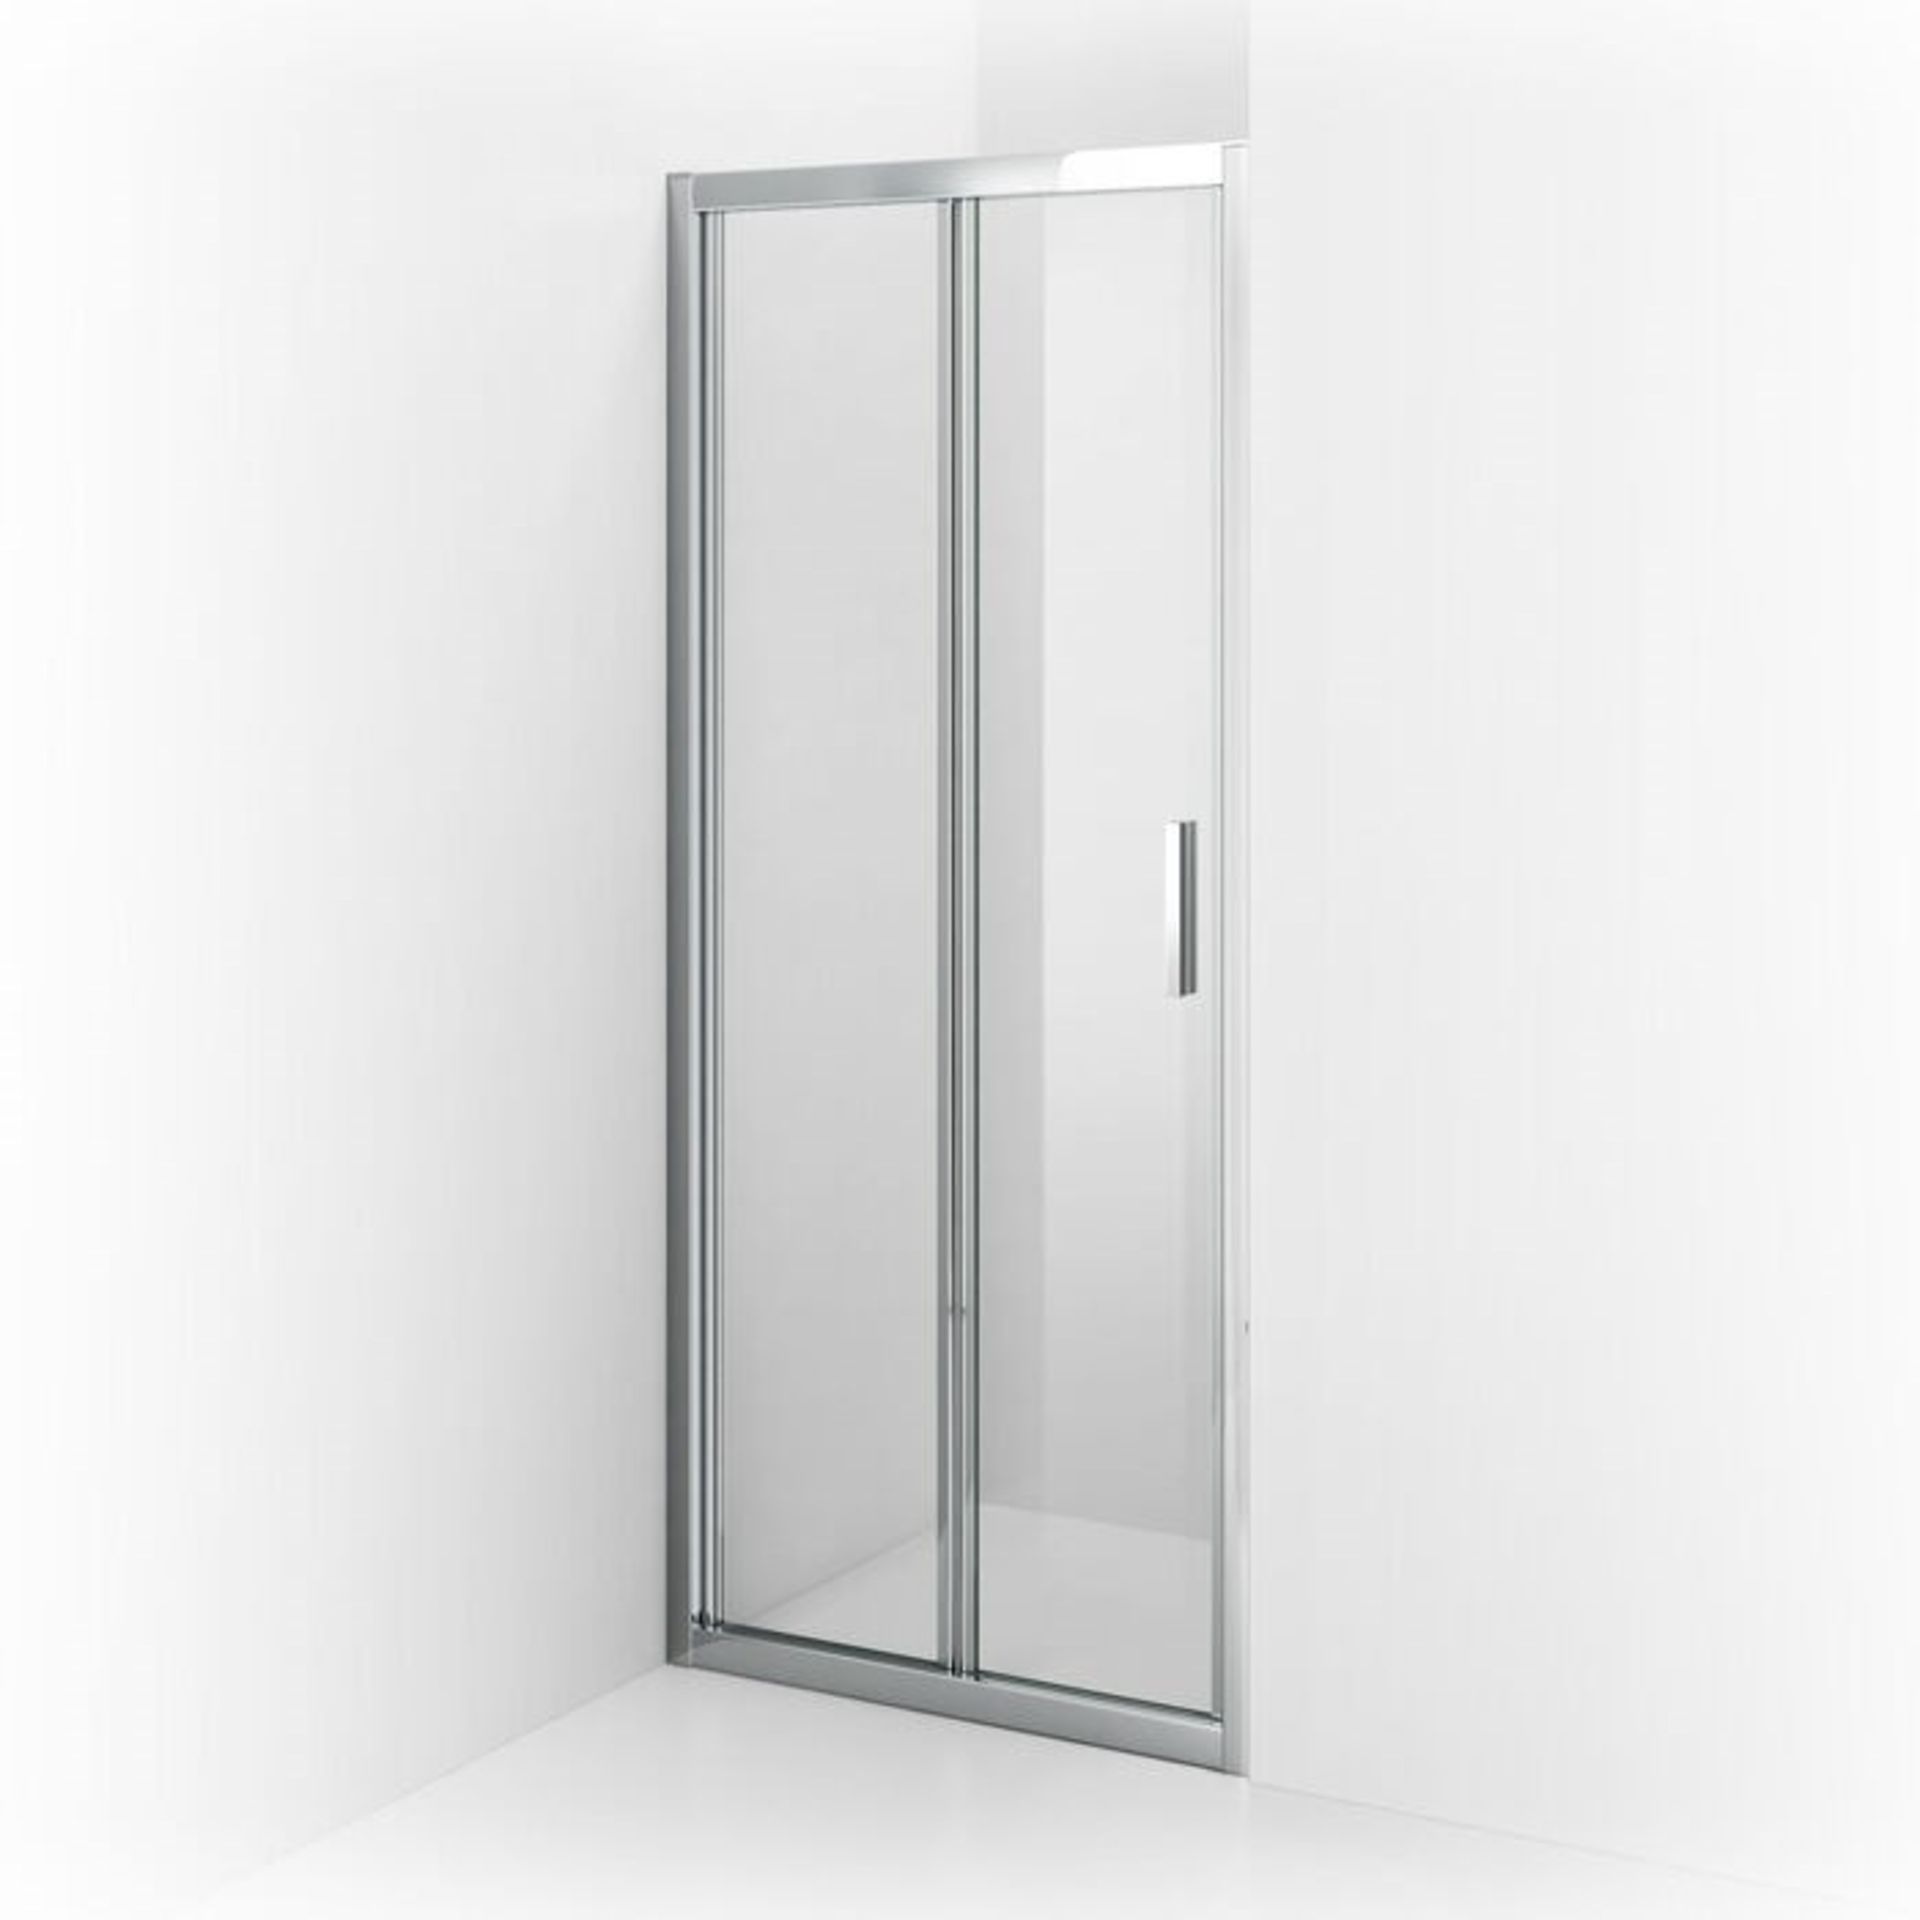 (H95) 800mm - 6mm - Elements EasyClean Bifold Shower Door. RRP £299.99.Mm Safety Glass - Singl... - Image 4 of 4